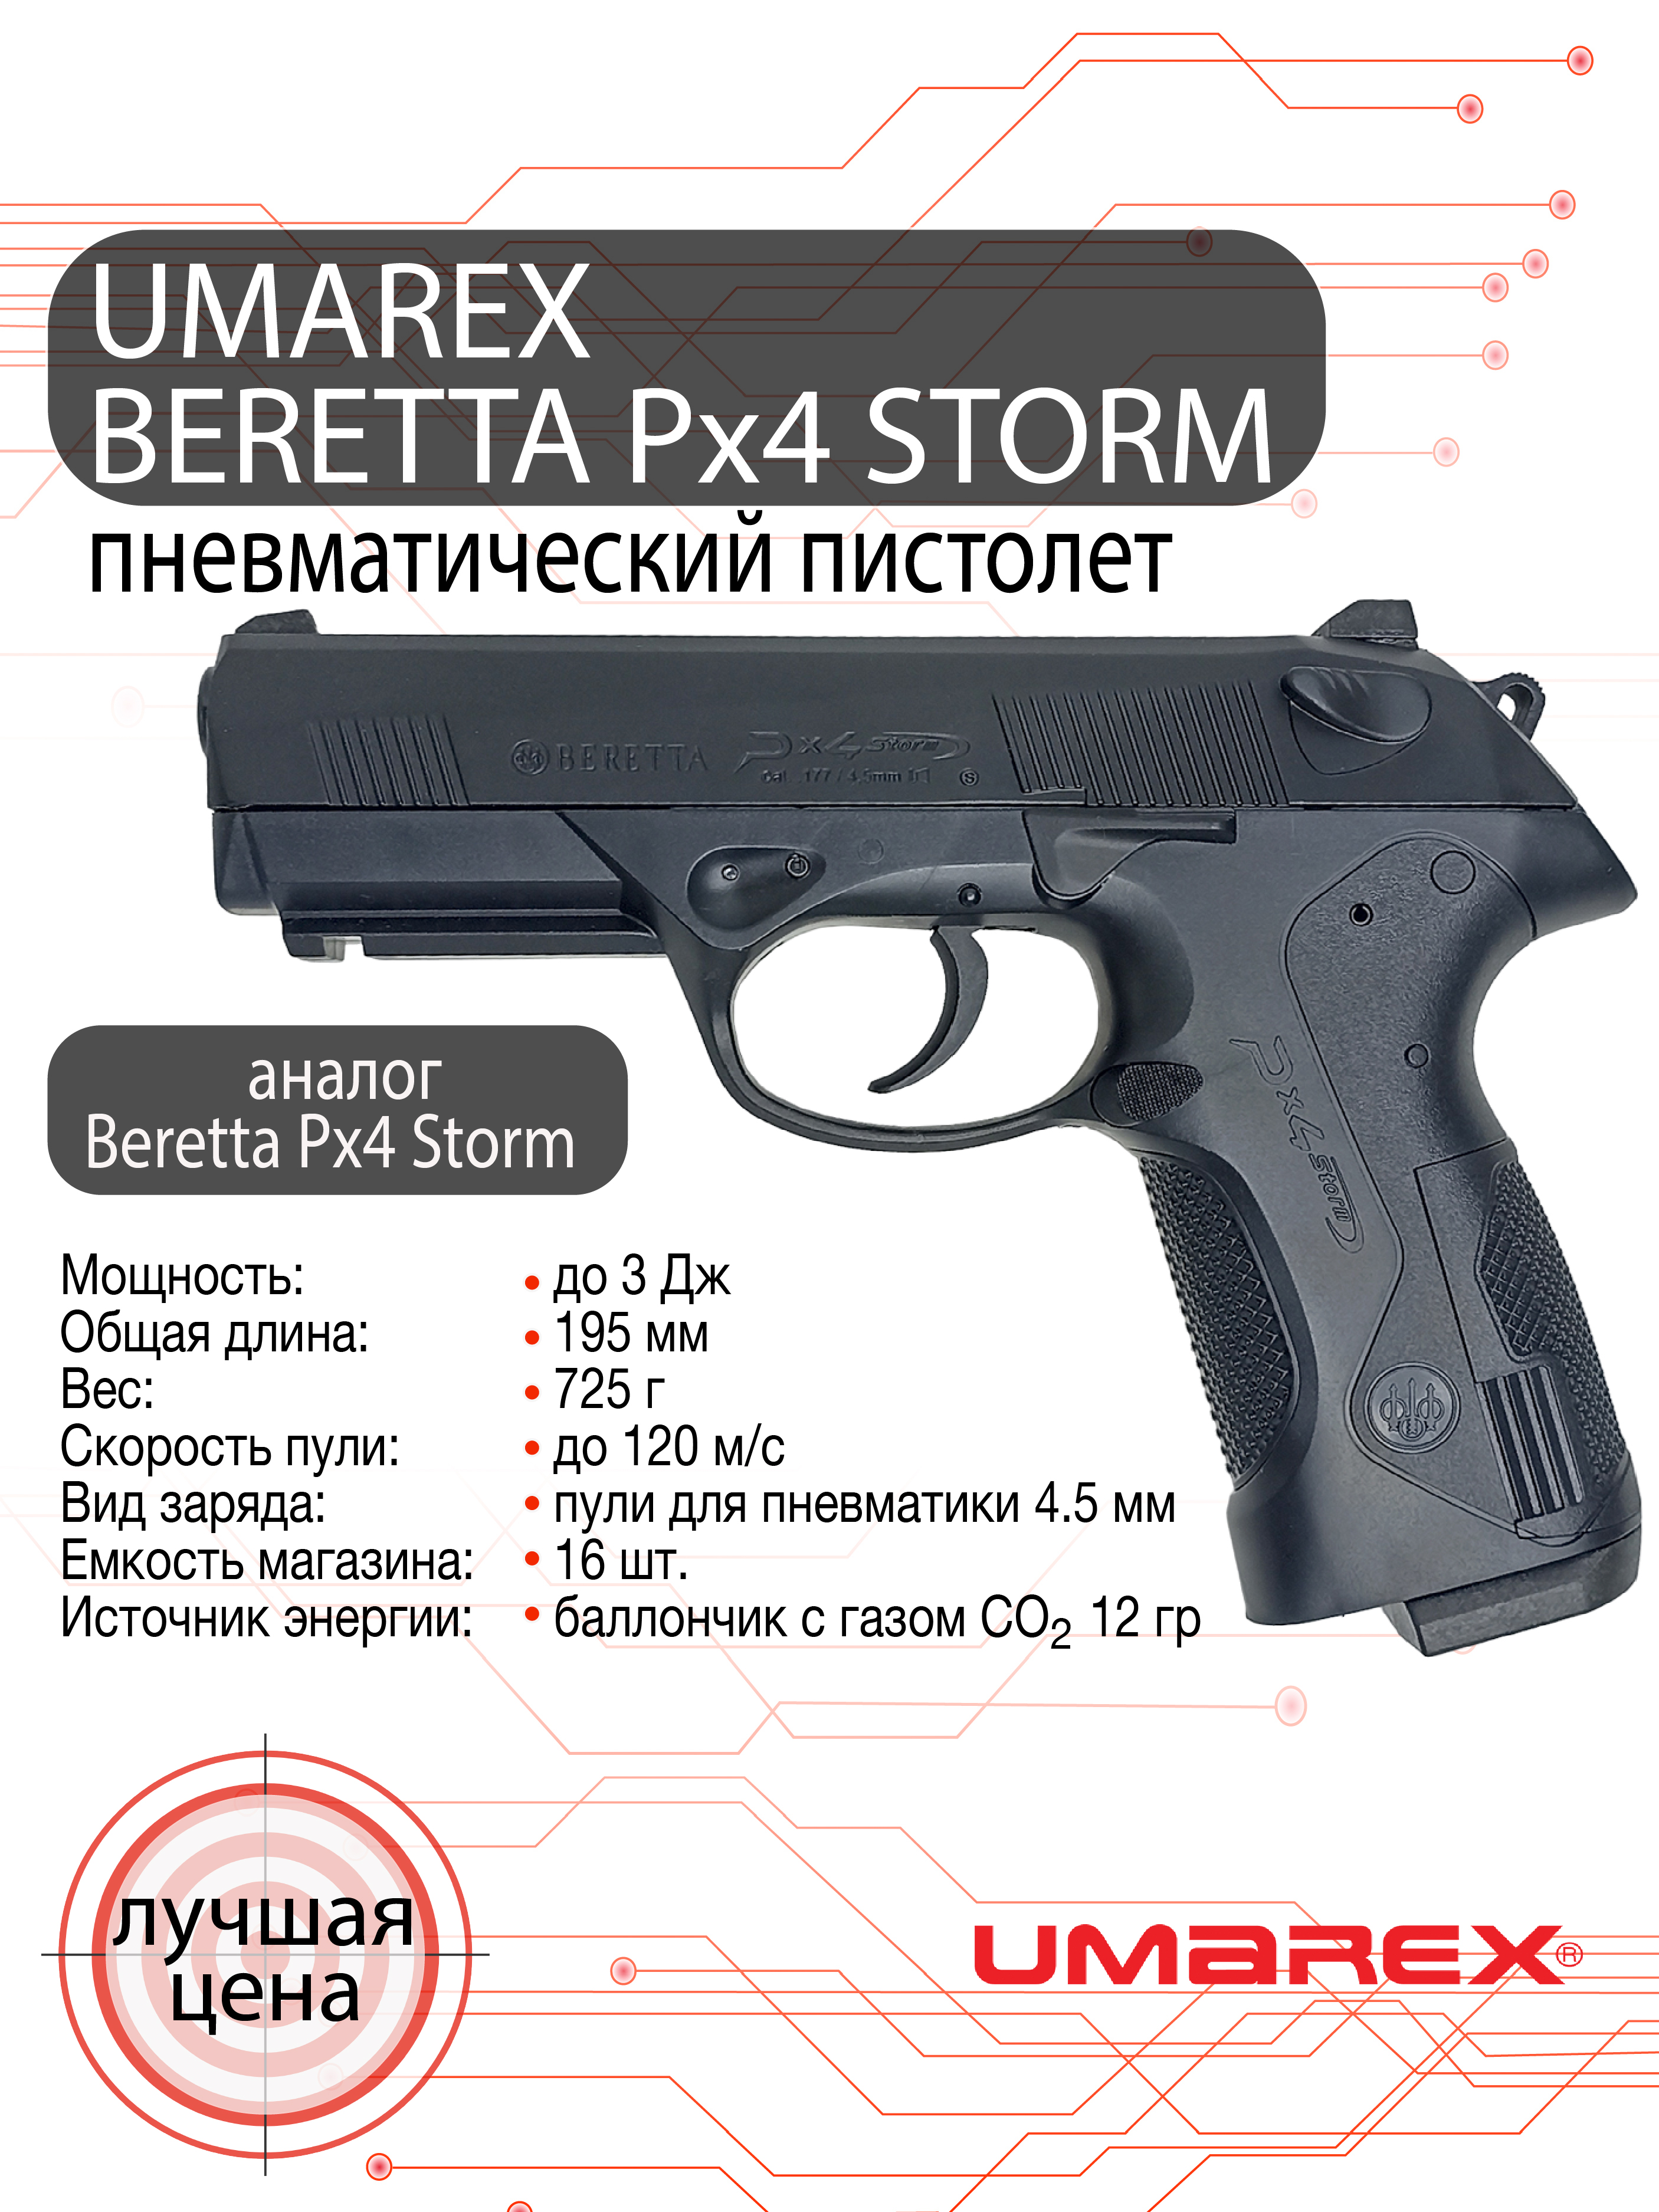 Пневматический пистолет Umarex Beretta Px4 Storm (beretta) 4,5 мм